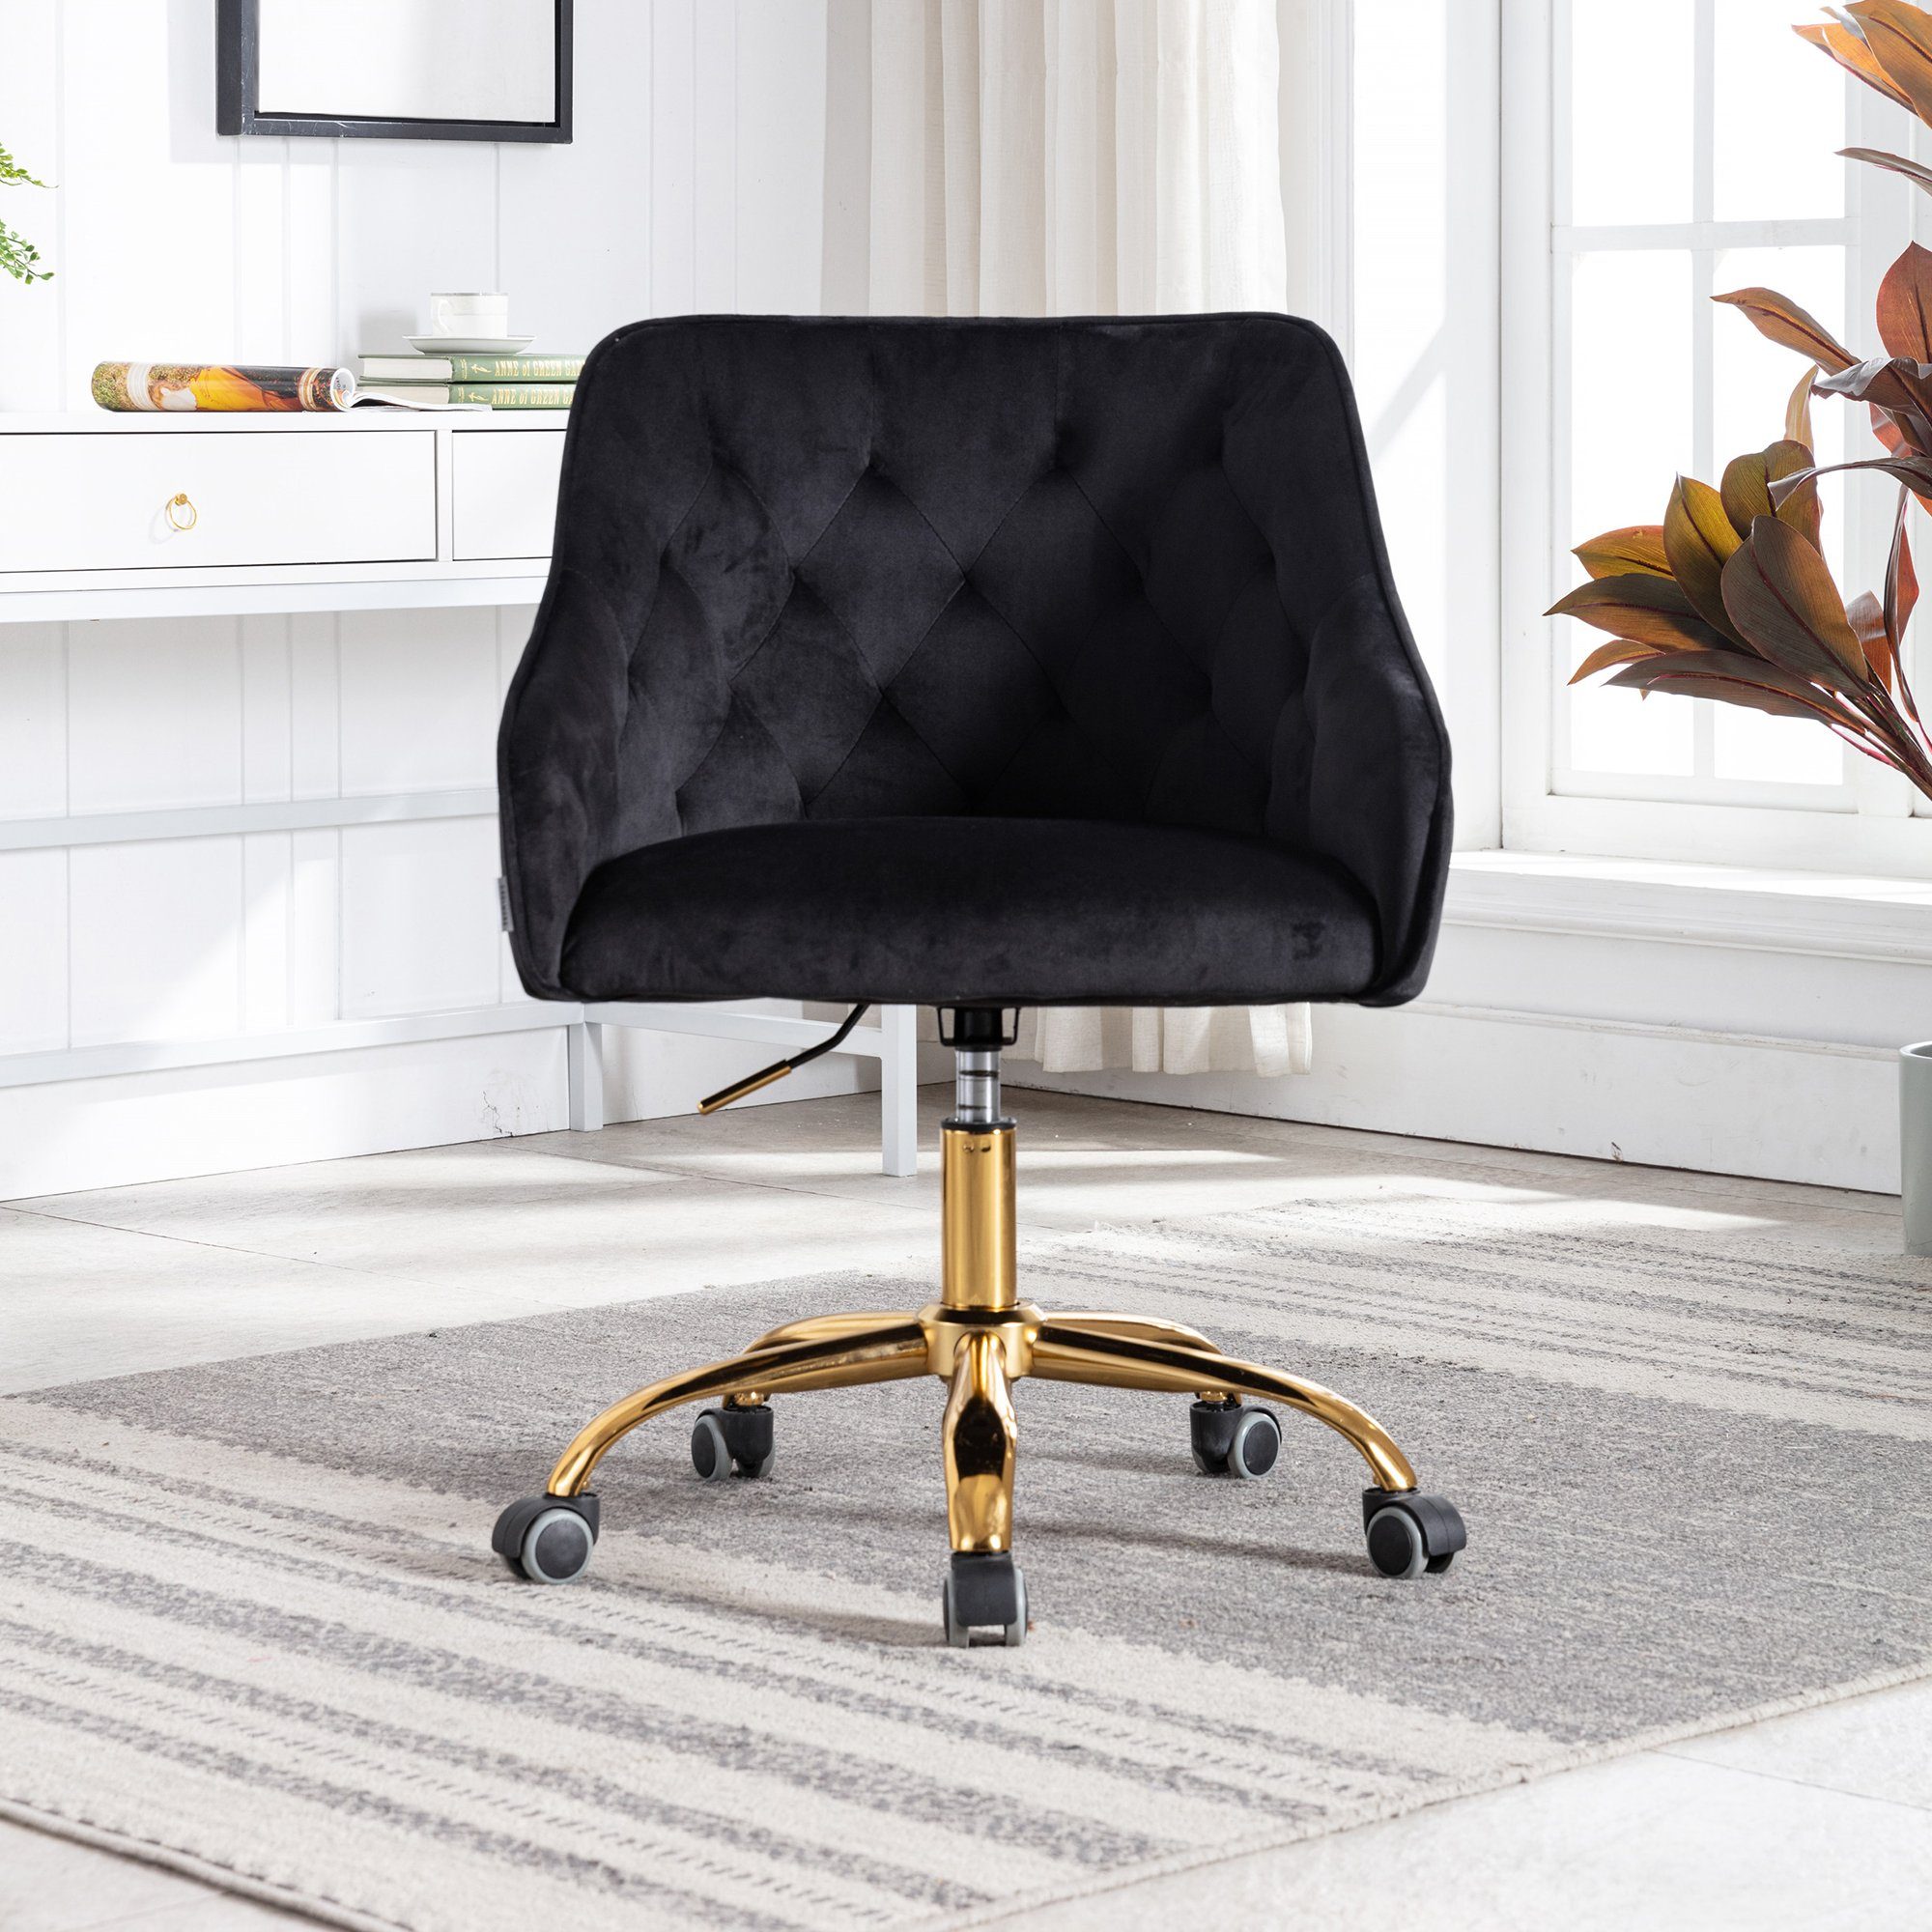 OKWISH Stuhl Samt Bürostuhl, Schminkstuhl, Stoff-Schreibtischstuhl (360° drehbar, höhenverstellbar), hübscher schicker Stuhl, goldener Bürostuhl schwarz